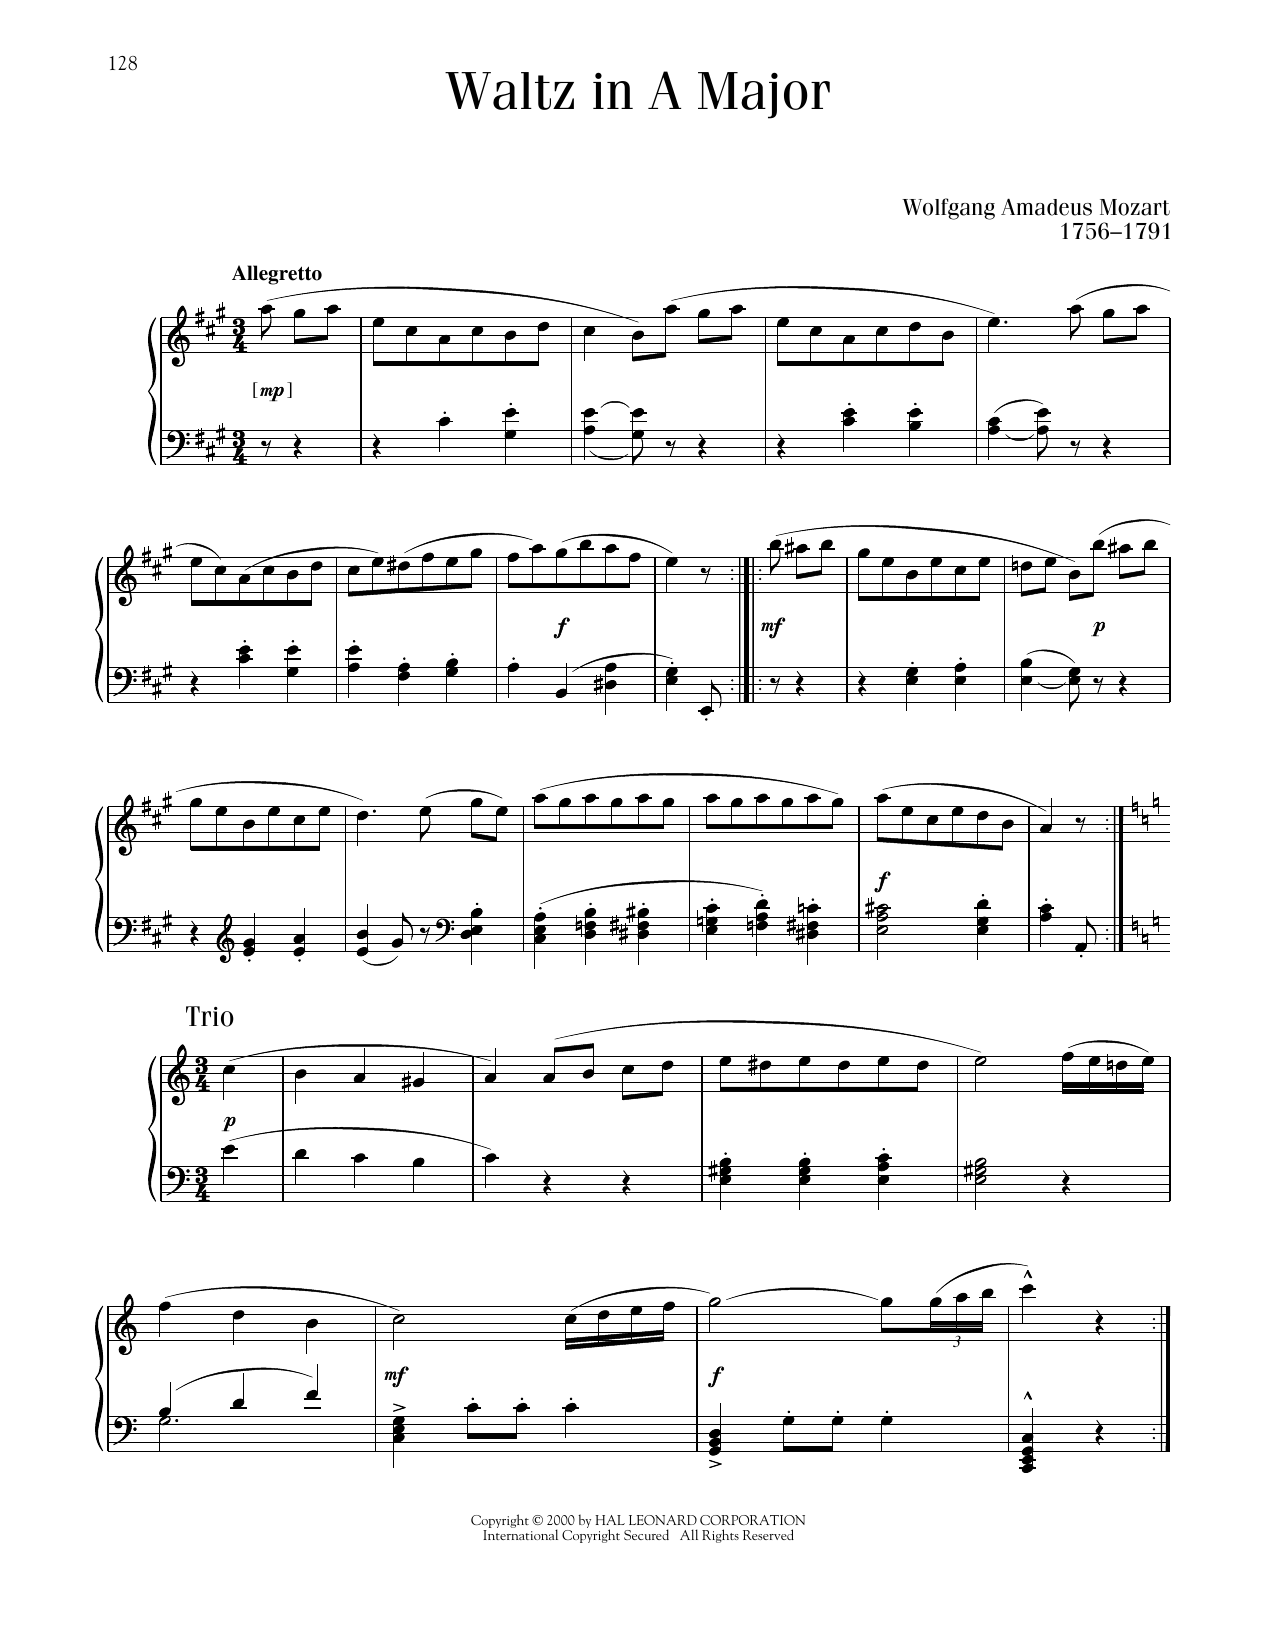 Wolfgang Amadeus Mozart Waltz In A Major sheet music notes printable PDF score